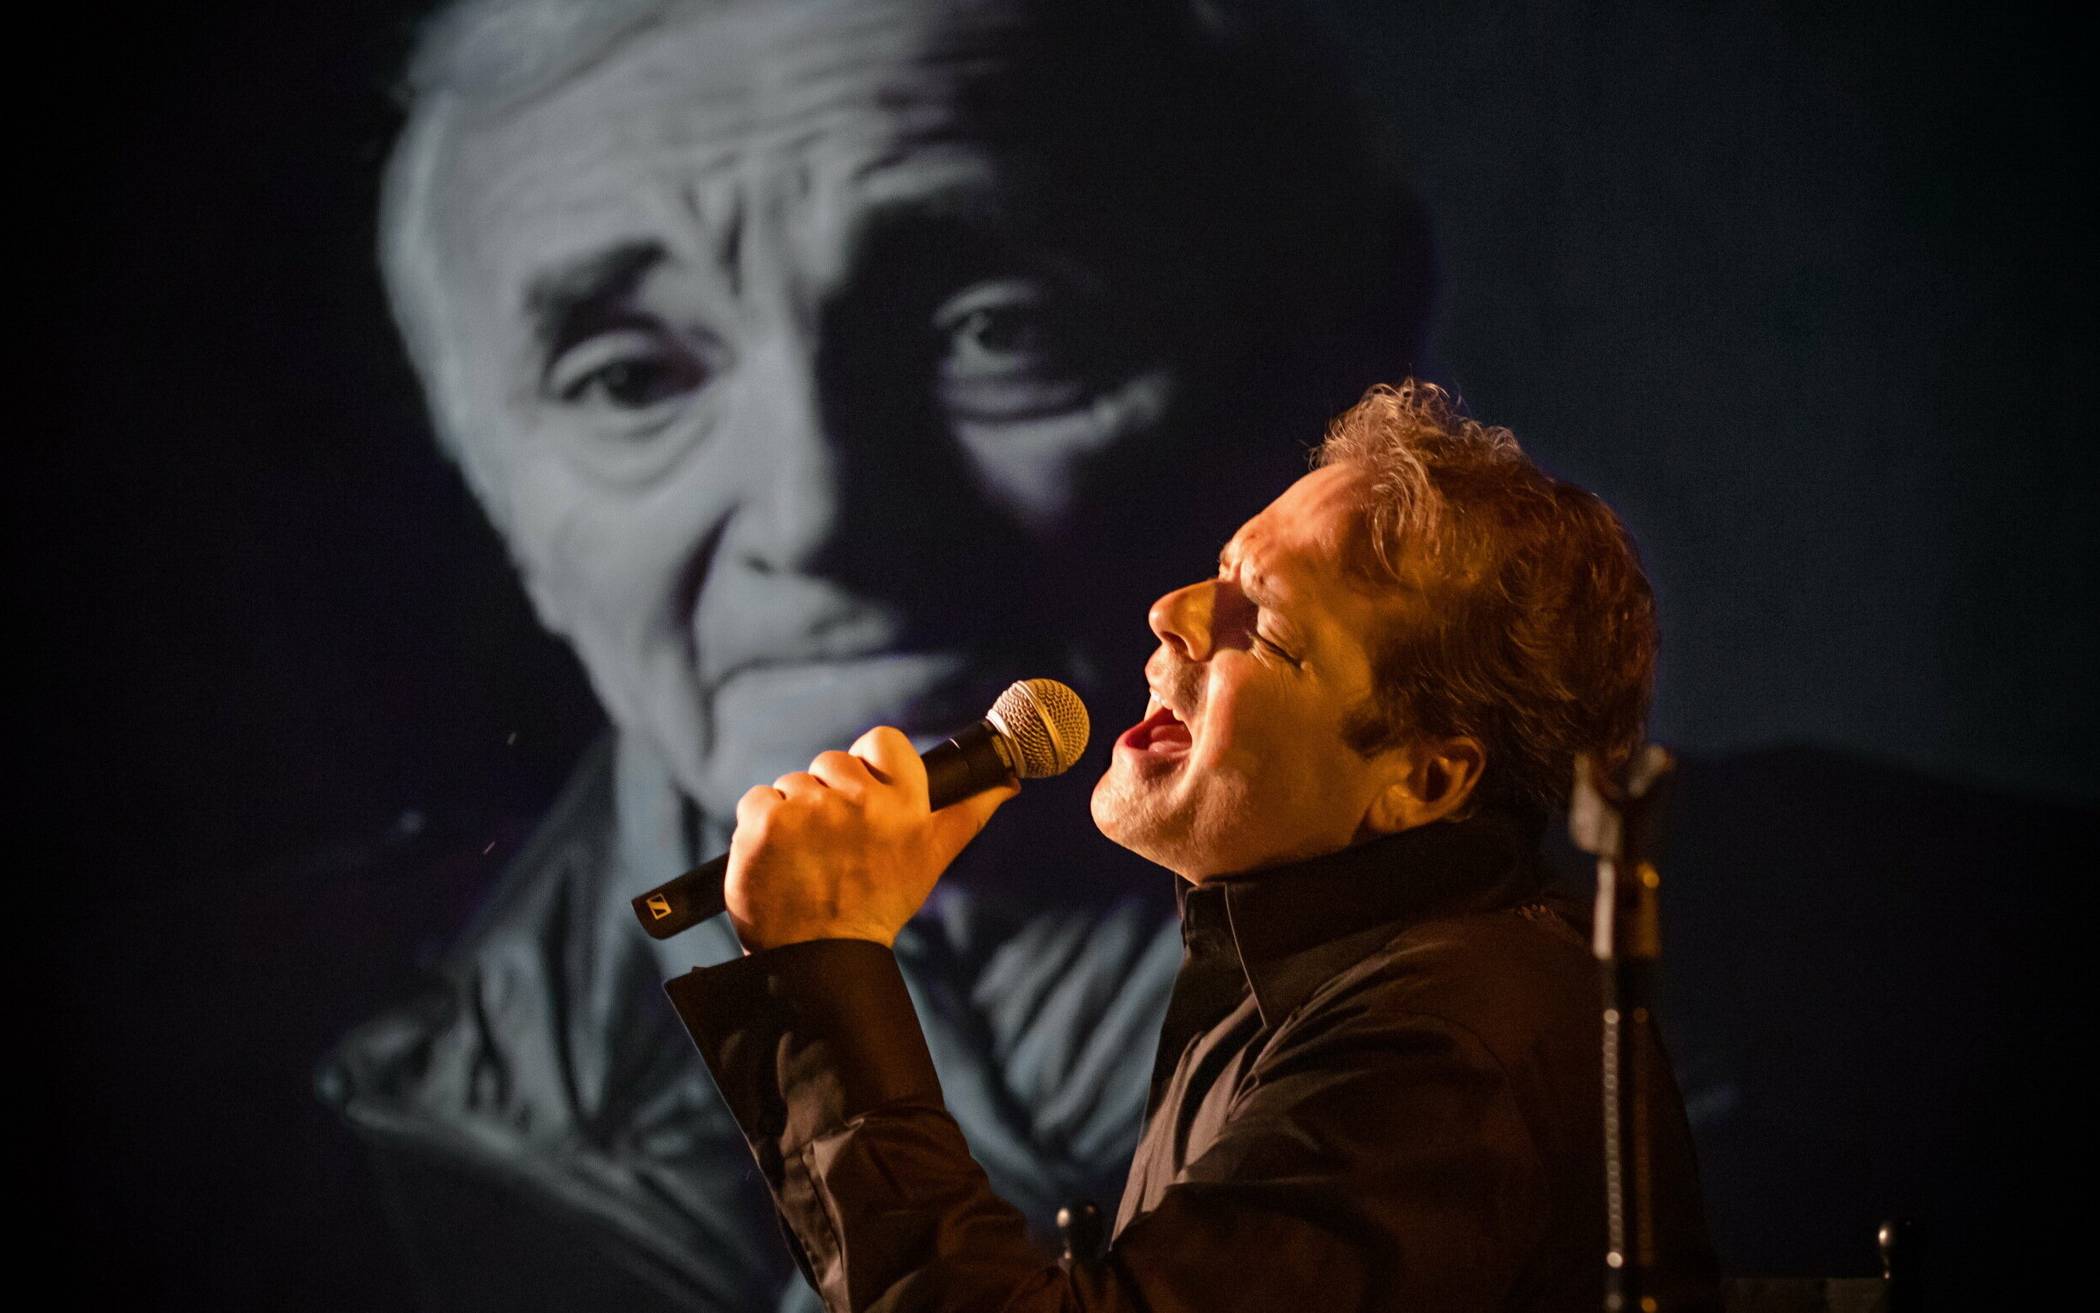 Stephan Hippe feiert am morgigen Sonntag den großen französischen Chansonnier Charles Aznavour. 